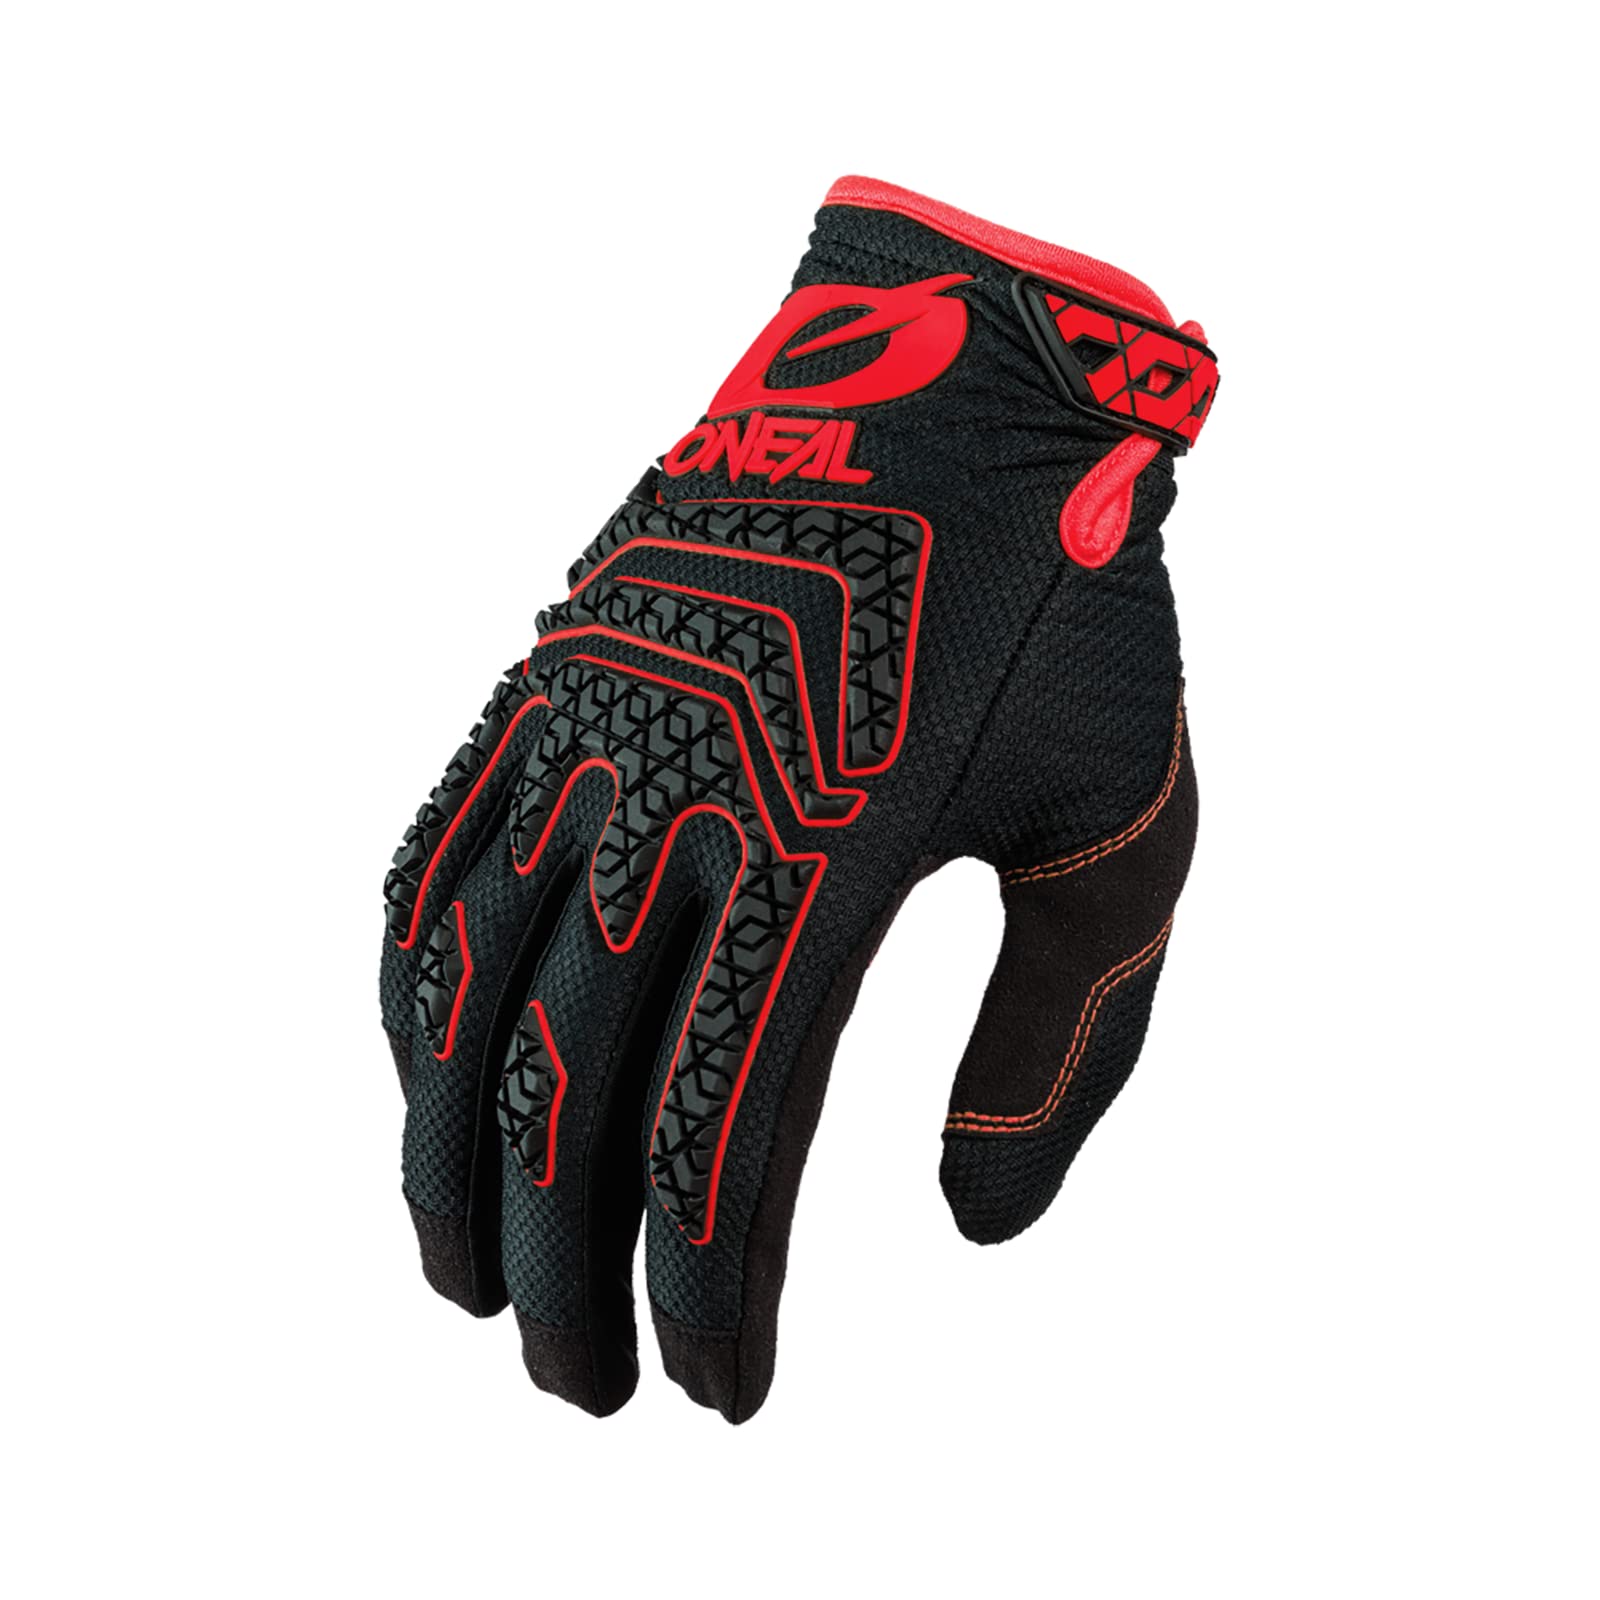 O'NEAL | Fahrrad- & Motocross-Handschuhe | MX MTB DH FR Downhill Freeride | Langlebige, Flexible Materialien, Silikonprint für Grip | Sniper Elite Glove | Erwachsene | Schwarz Rot | Größe M von O'NEAL